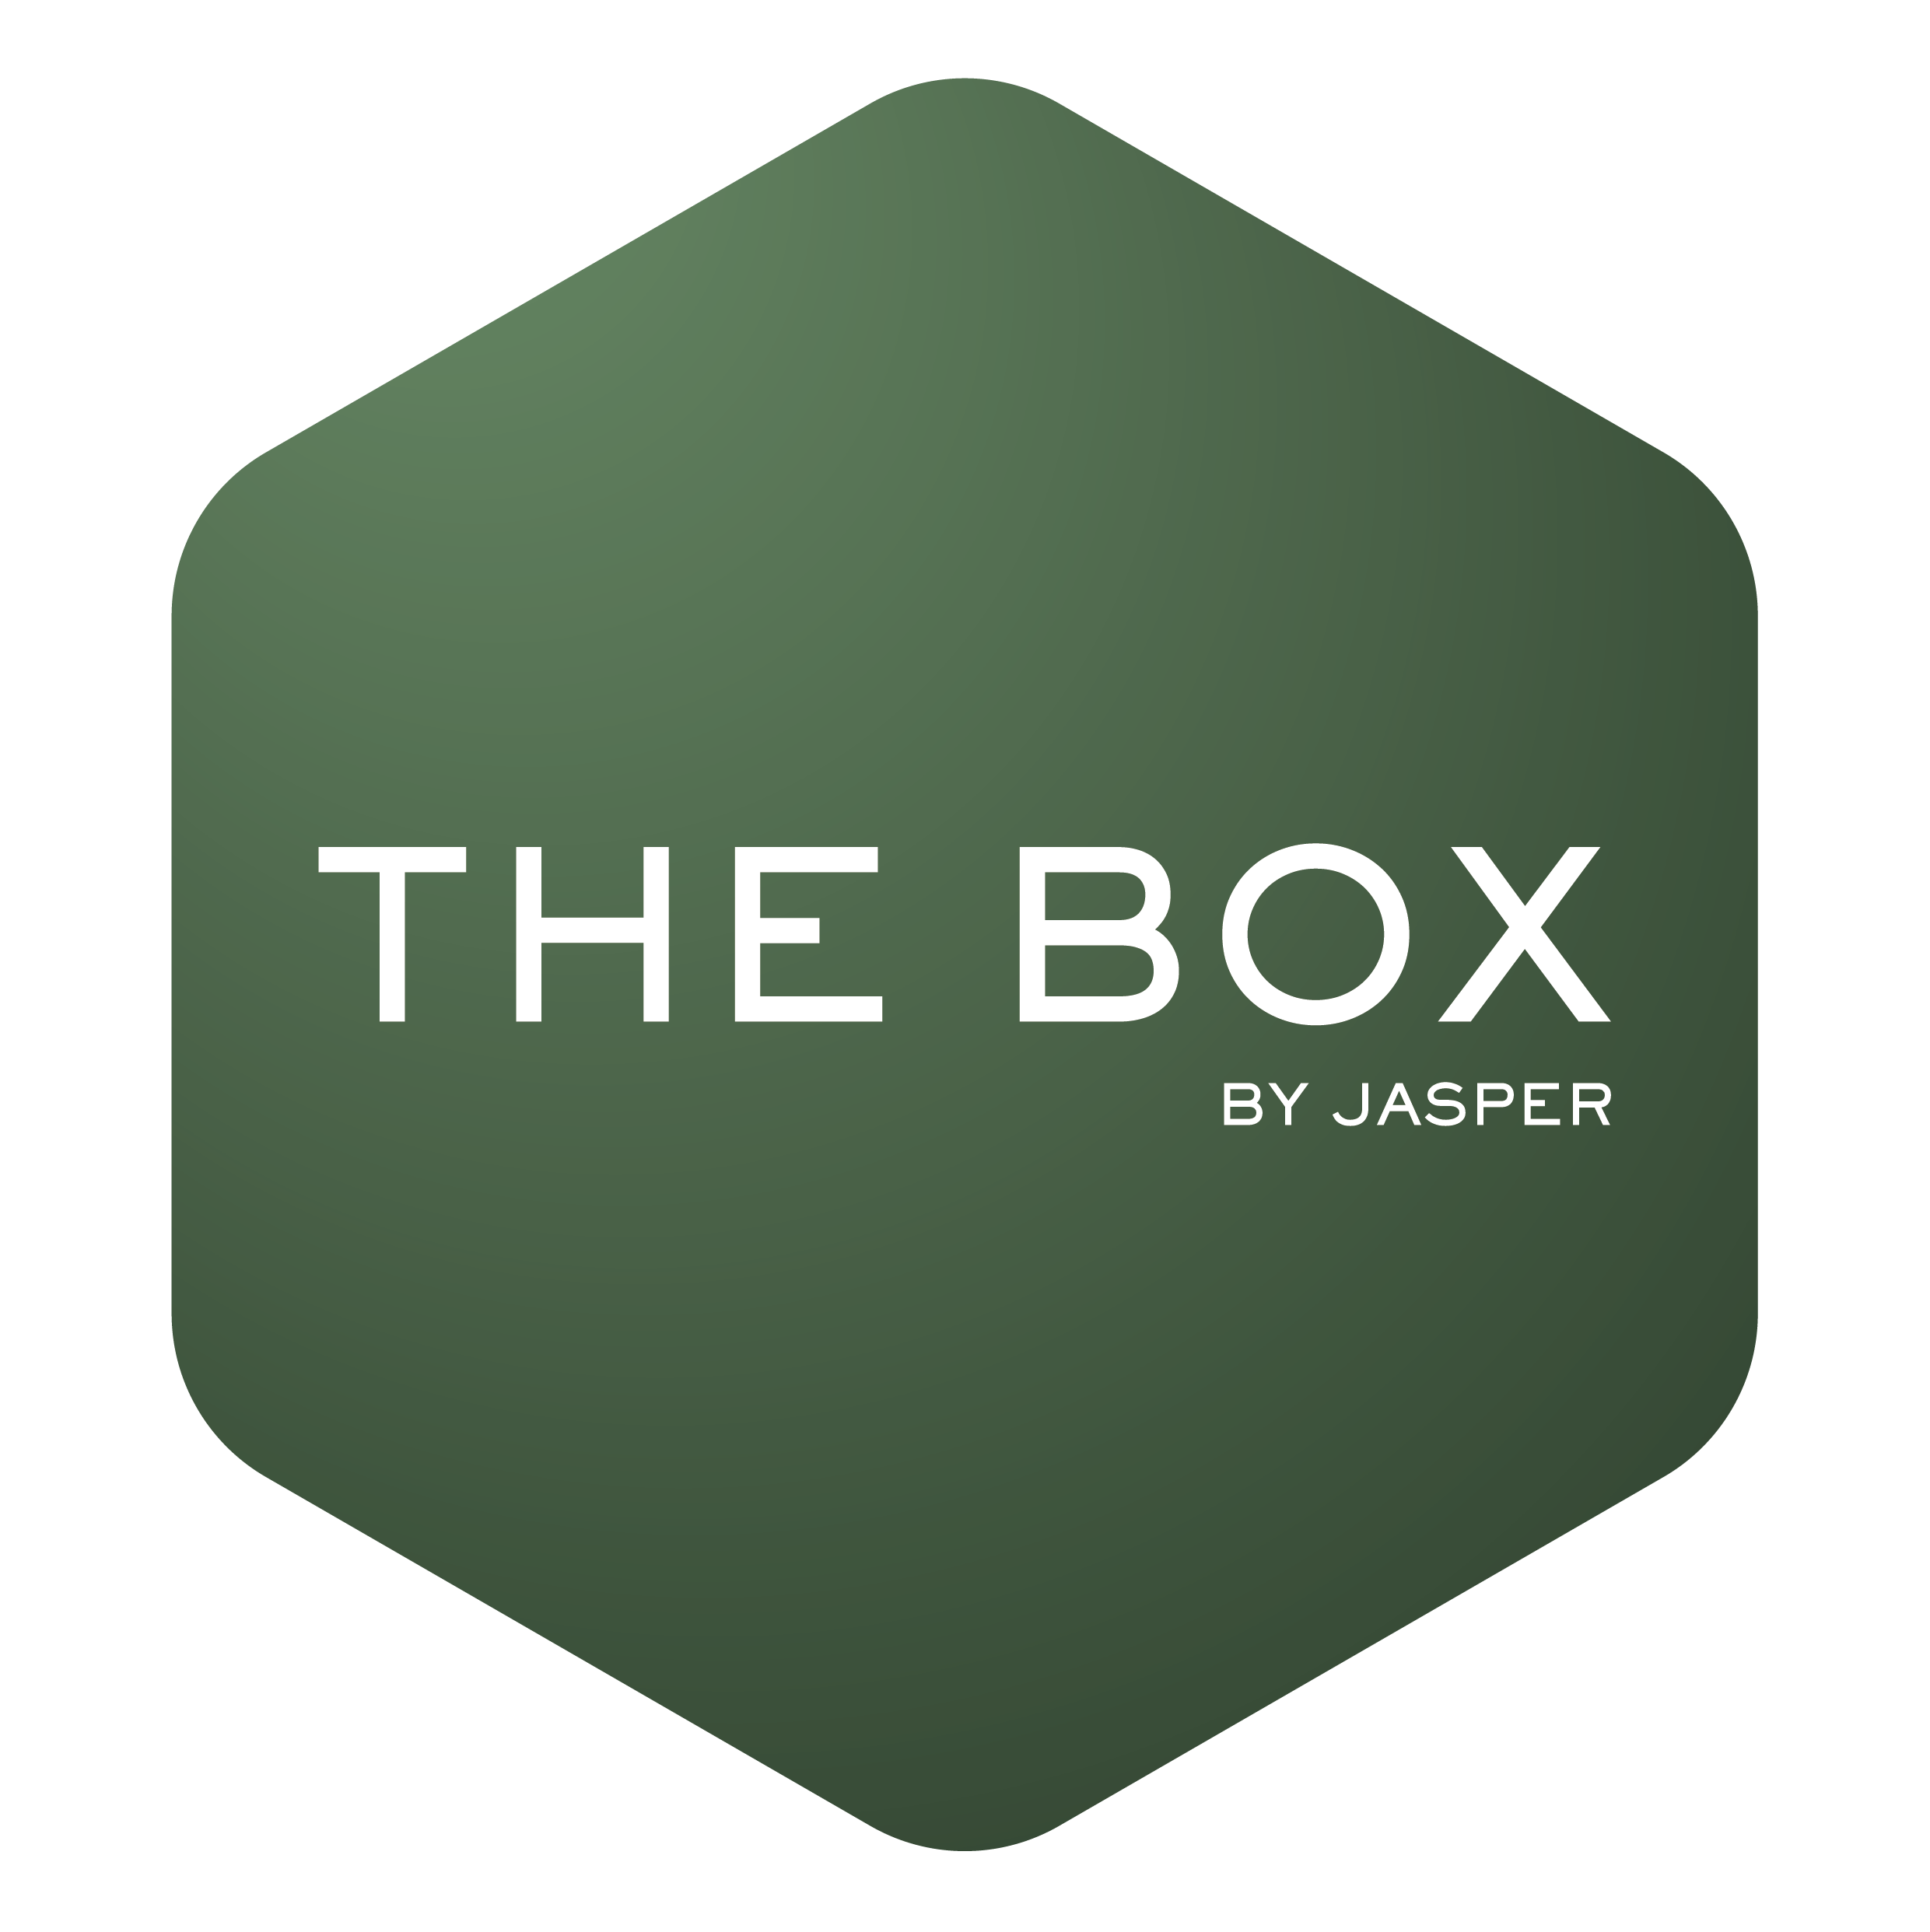 The Box by Jasper